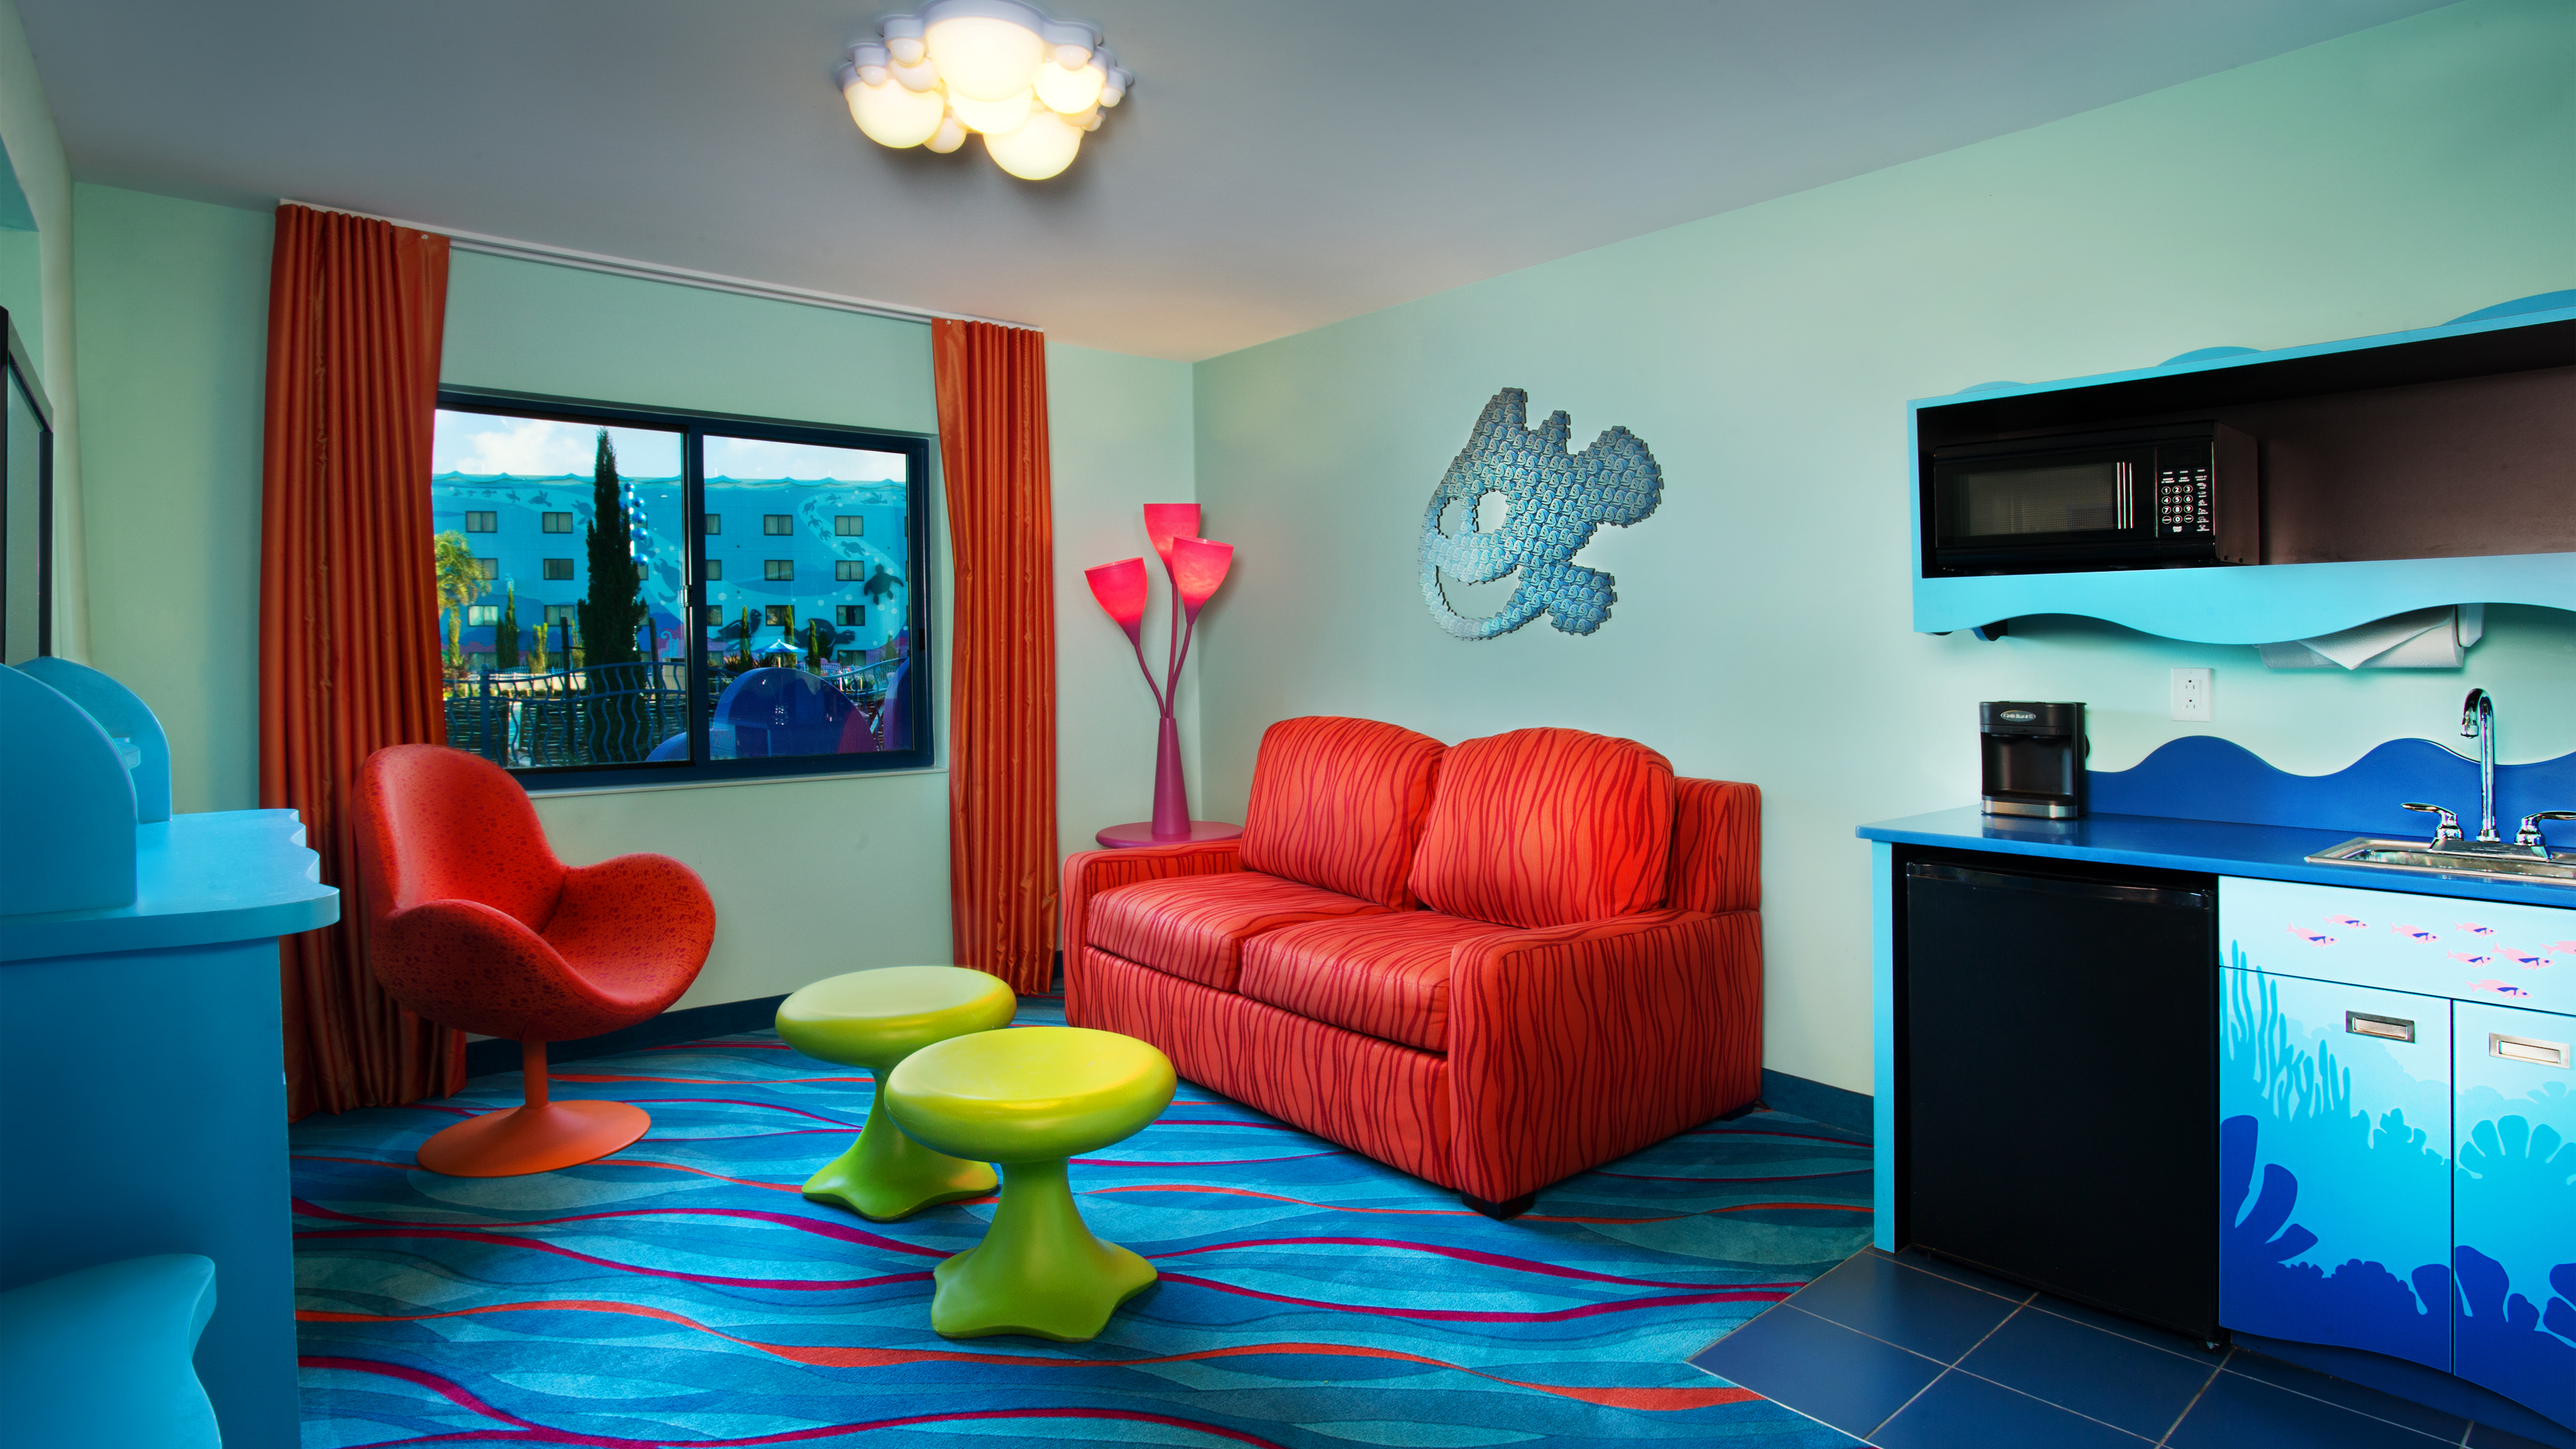 Finding Nemo Family Suites Themeparkbeds Com